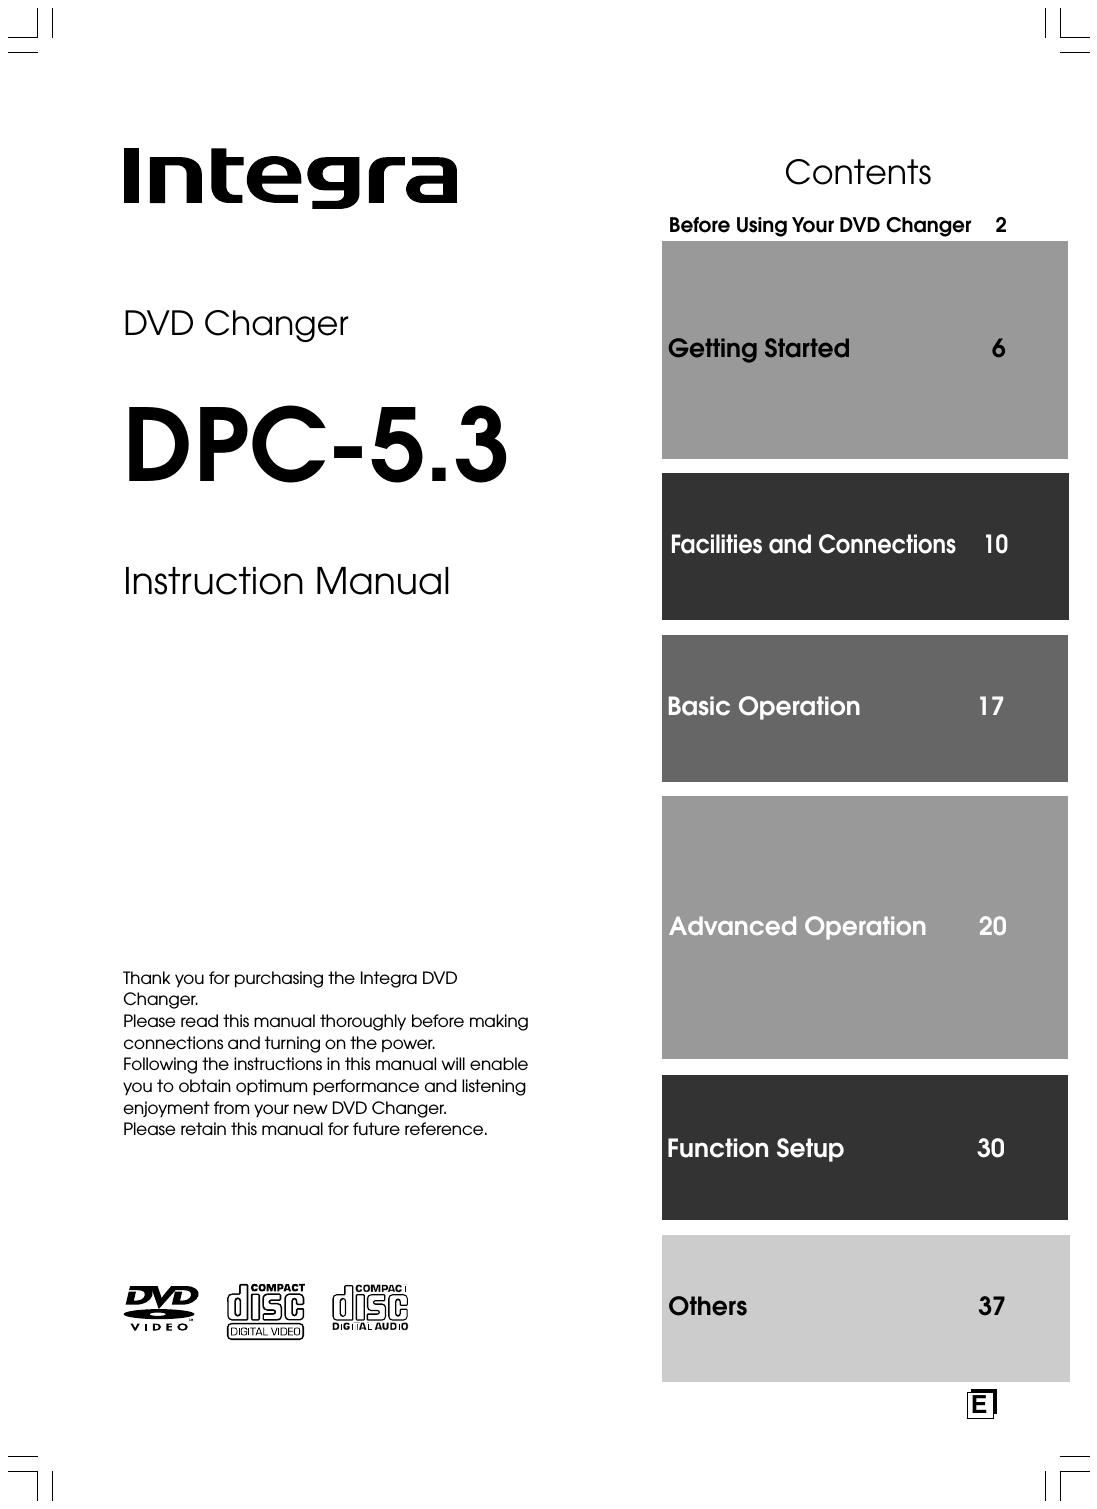 integra dpc 5 3 owners manual